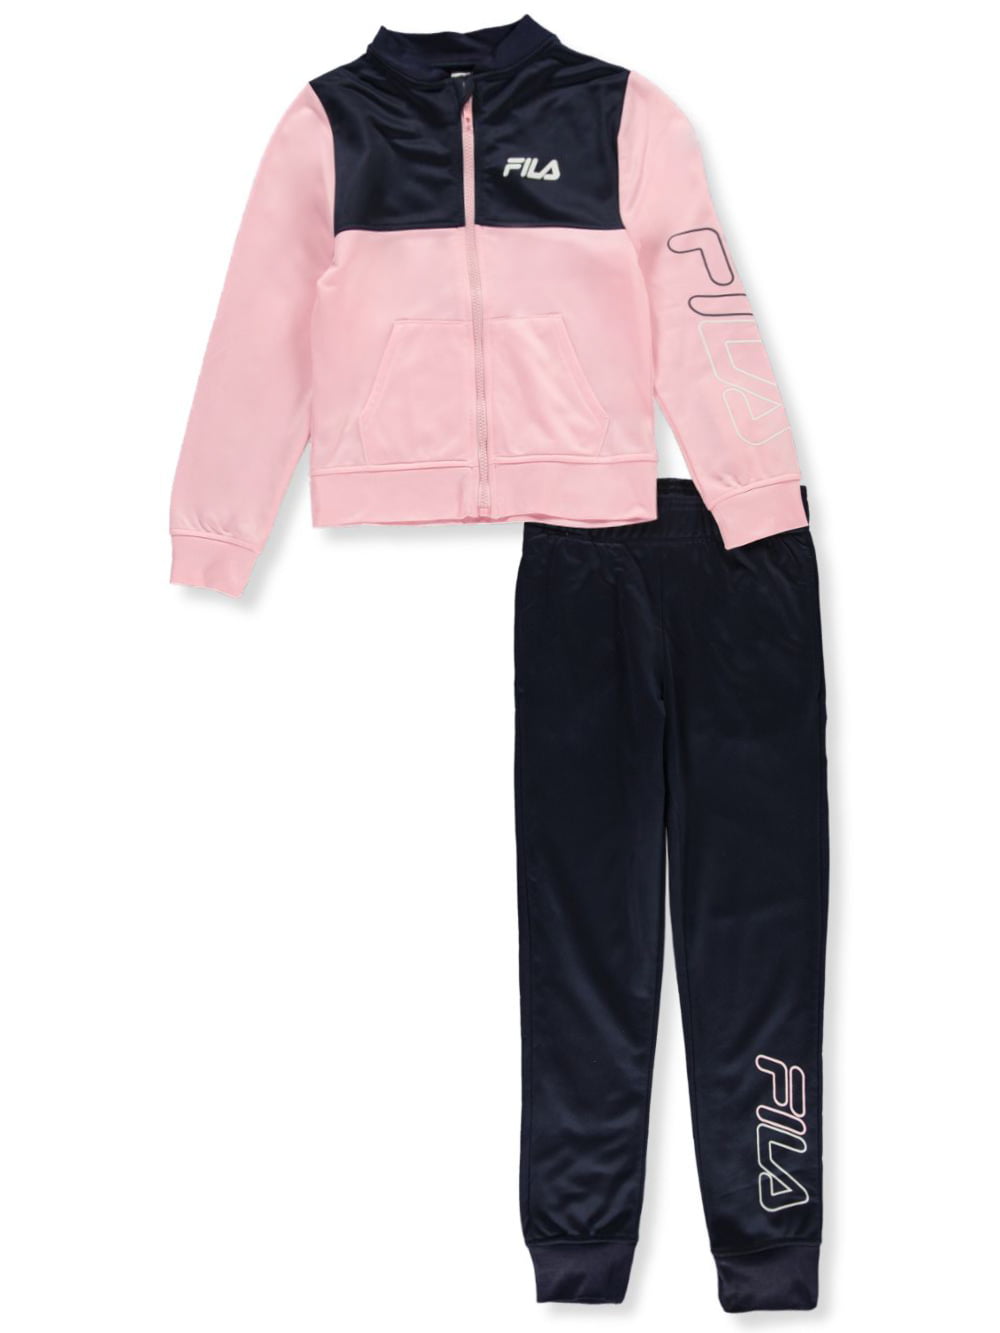 FILA - Fila Girls' Pieced 2-Piece Tracksuit Outfit (Toddler) - Walmart.com